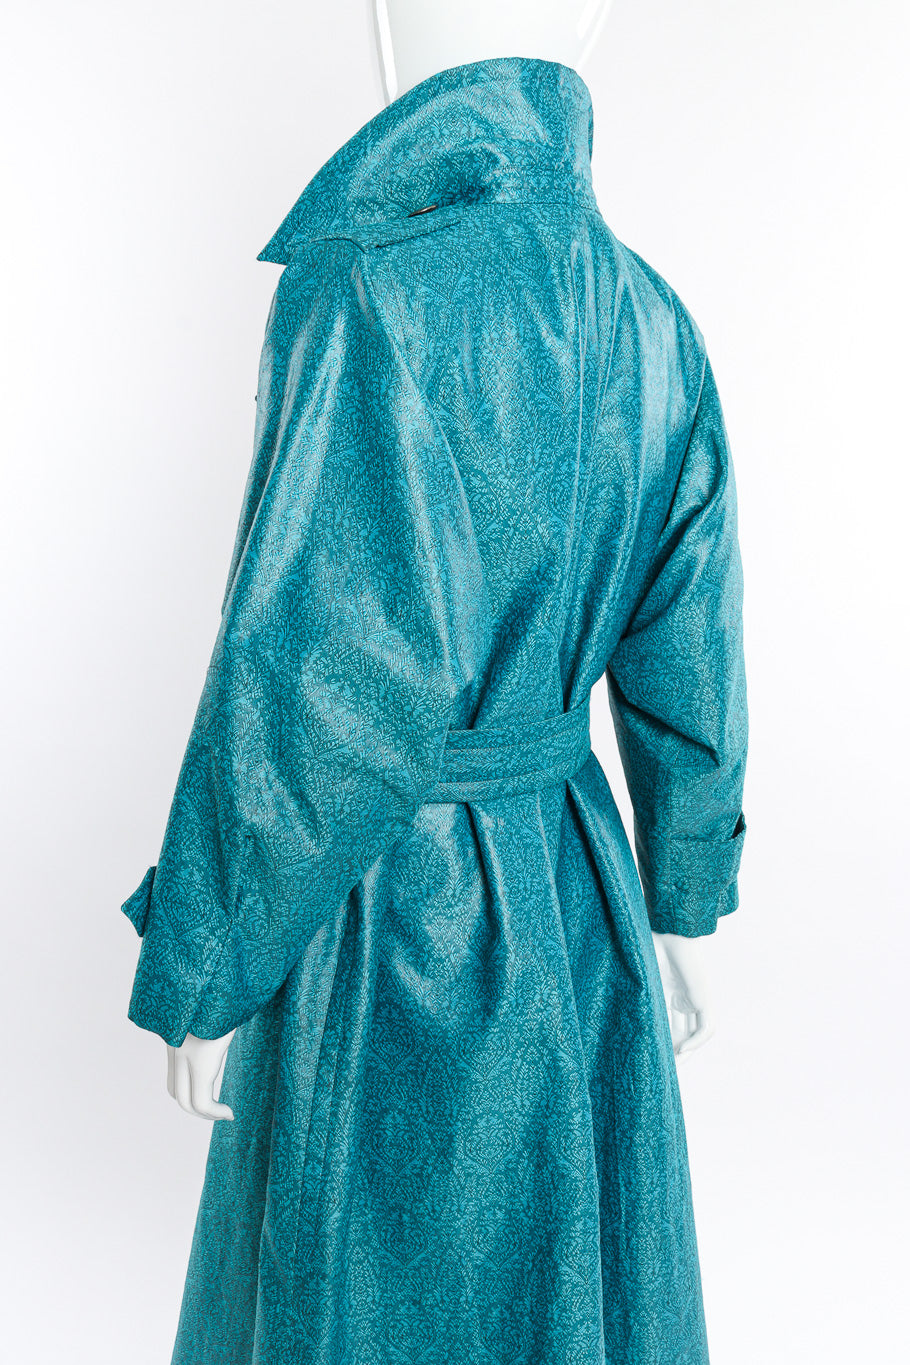 Vintage Yves Saint Laurent Damask Trench Coat back on mannequin closeup @recessla